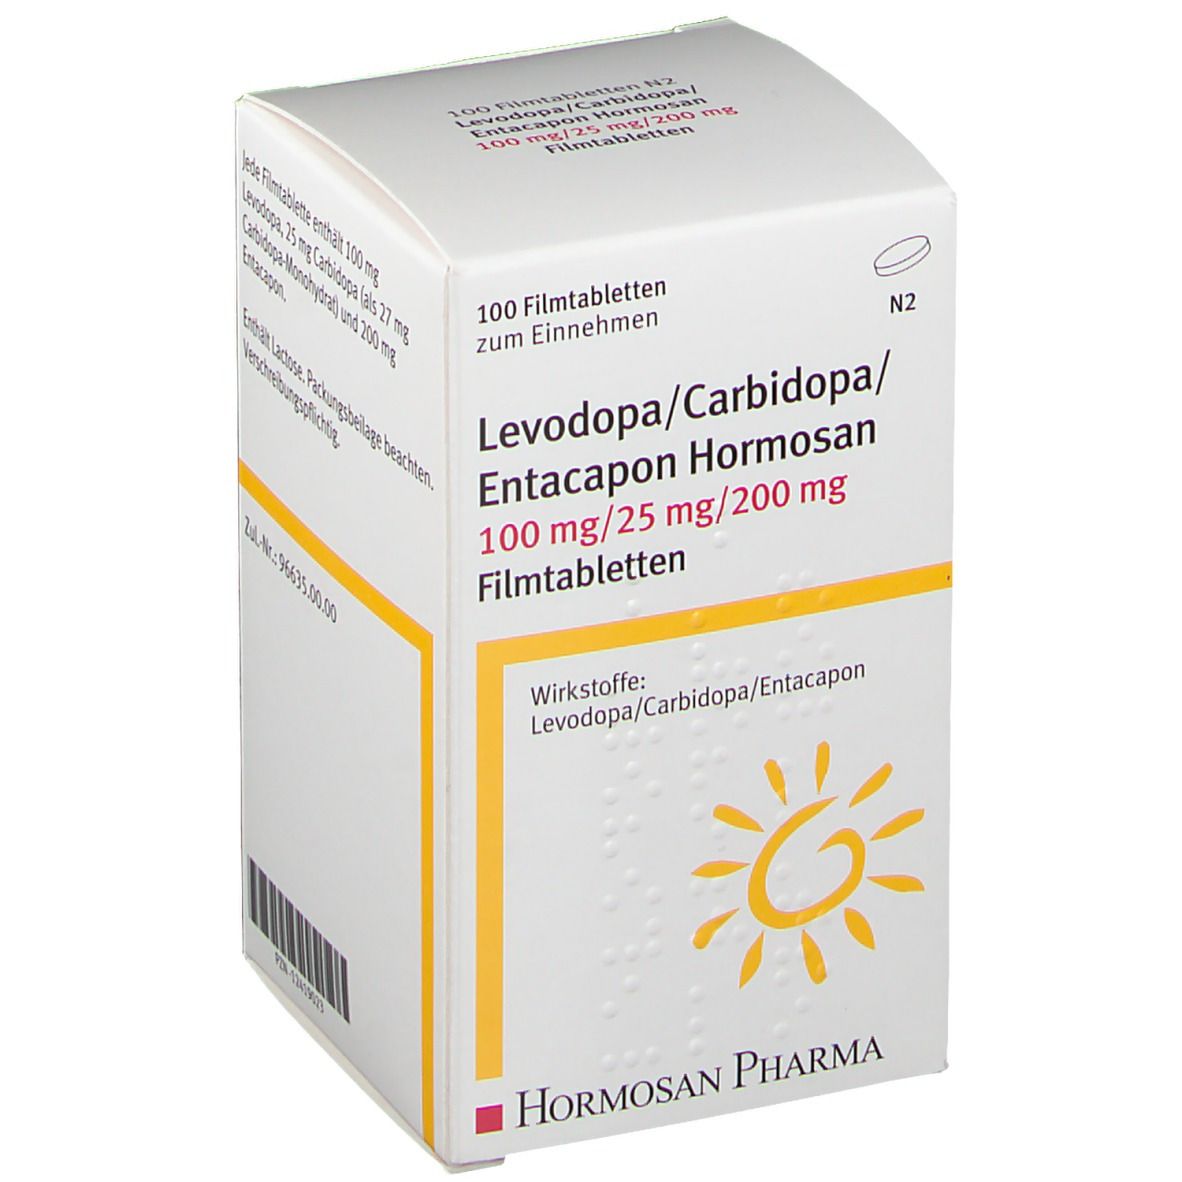 Levodopa/Carbidopa/Entacapon Hormosan 100 mg/25 mg/200 mg